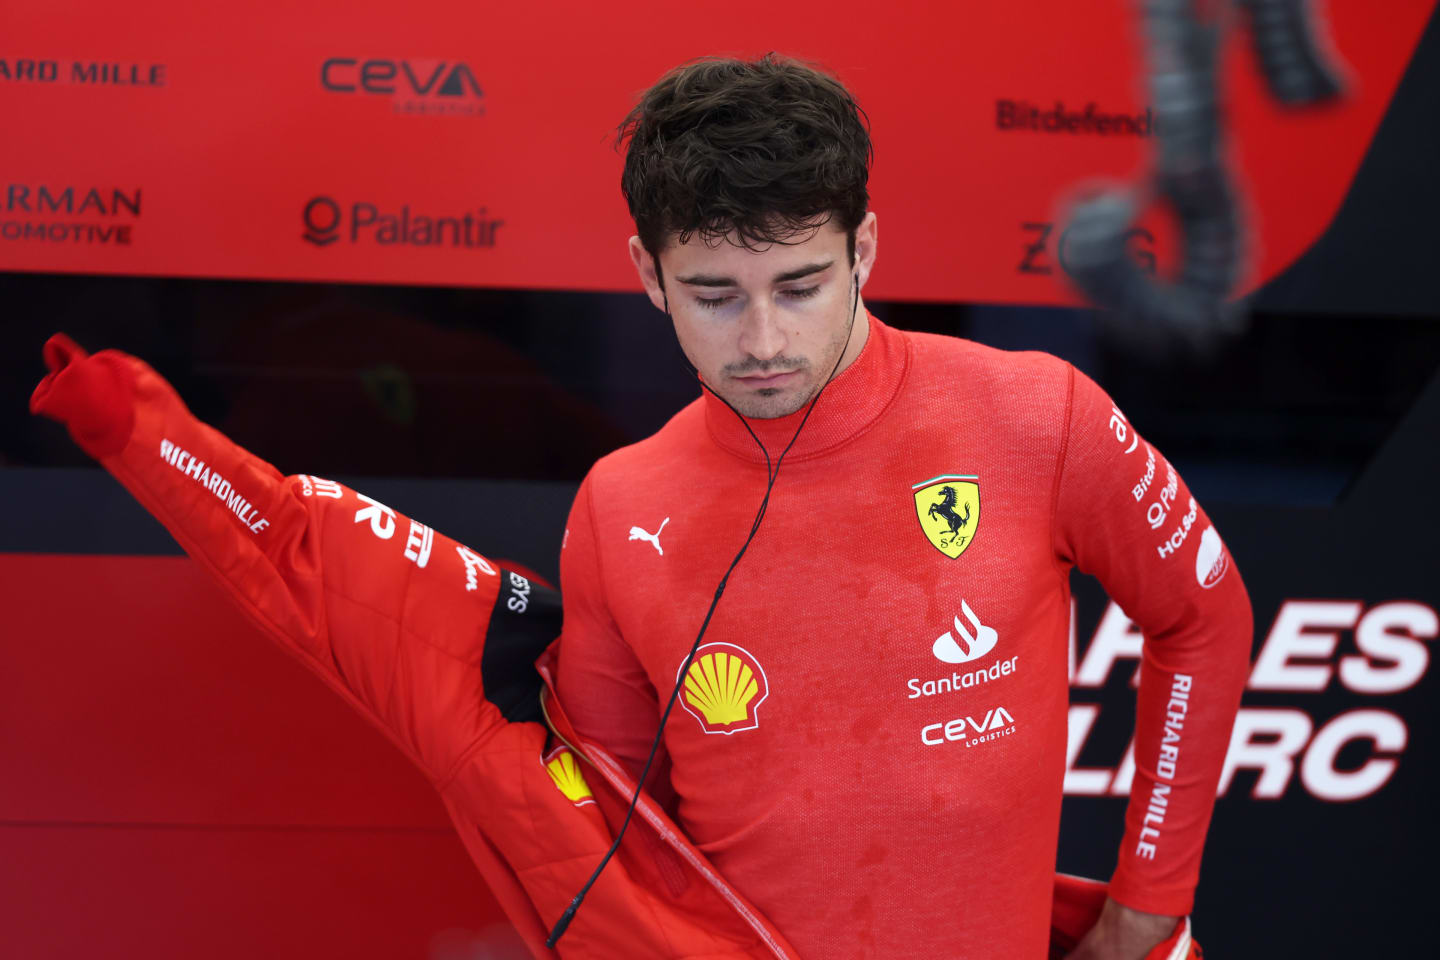 JEDDAH, SAUDI ARABIA - MARCH 17: Charles Leclerc of Monaco and Ferrari prepares to drive in the